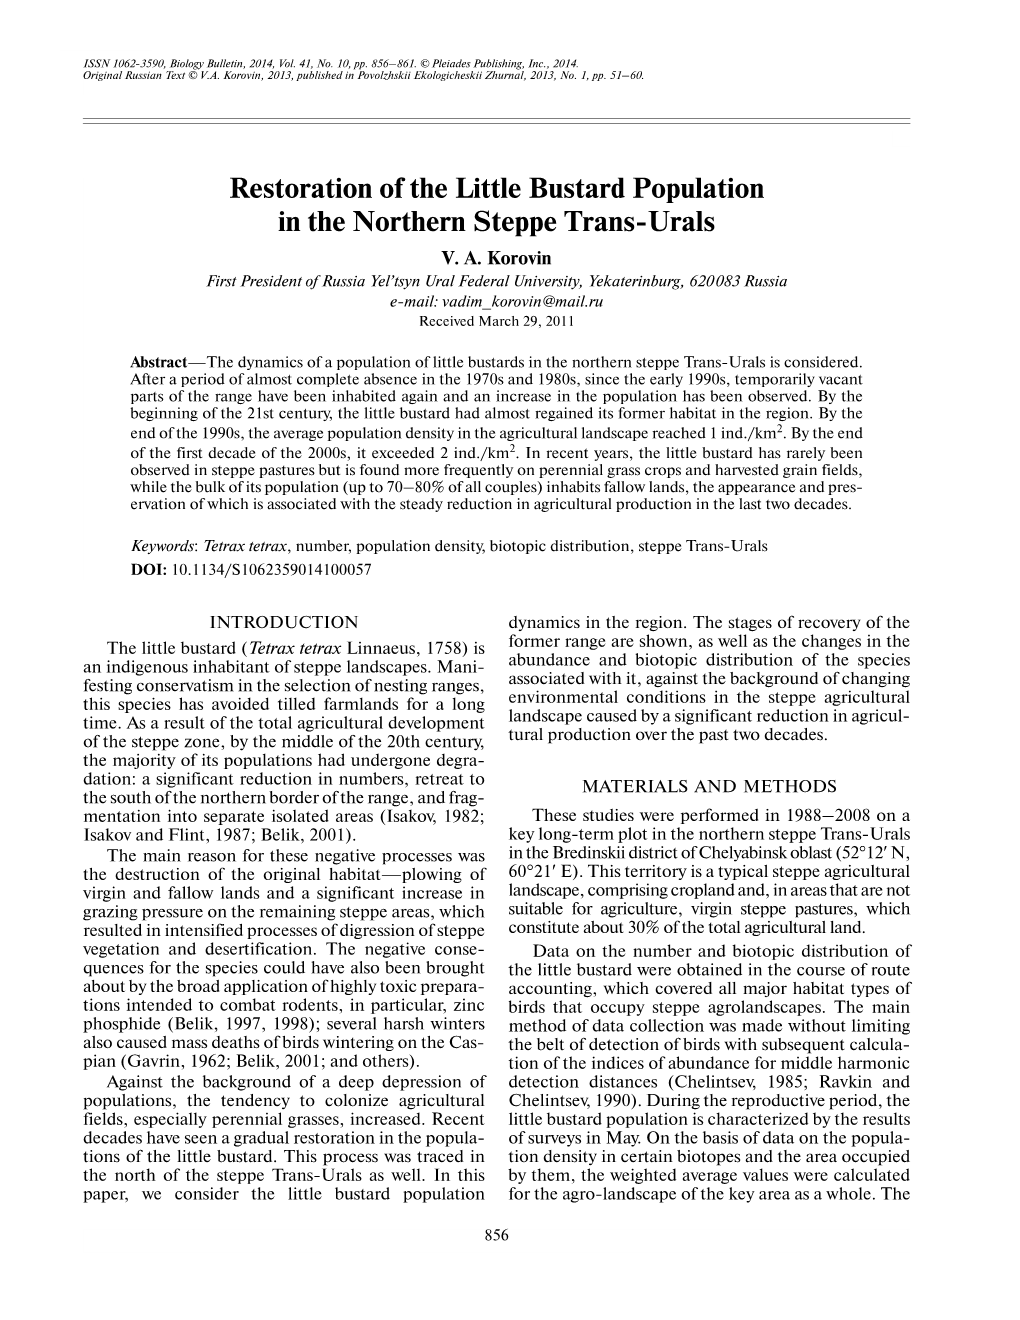 Restoration of the Little Bustard Population in the Northern Steppe Trans Urals